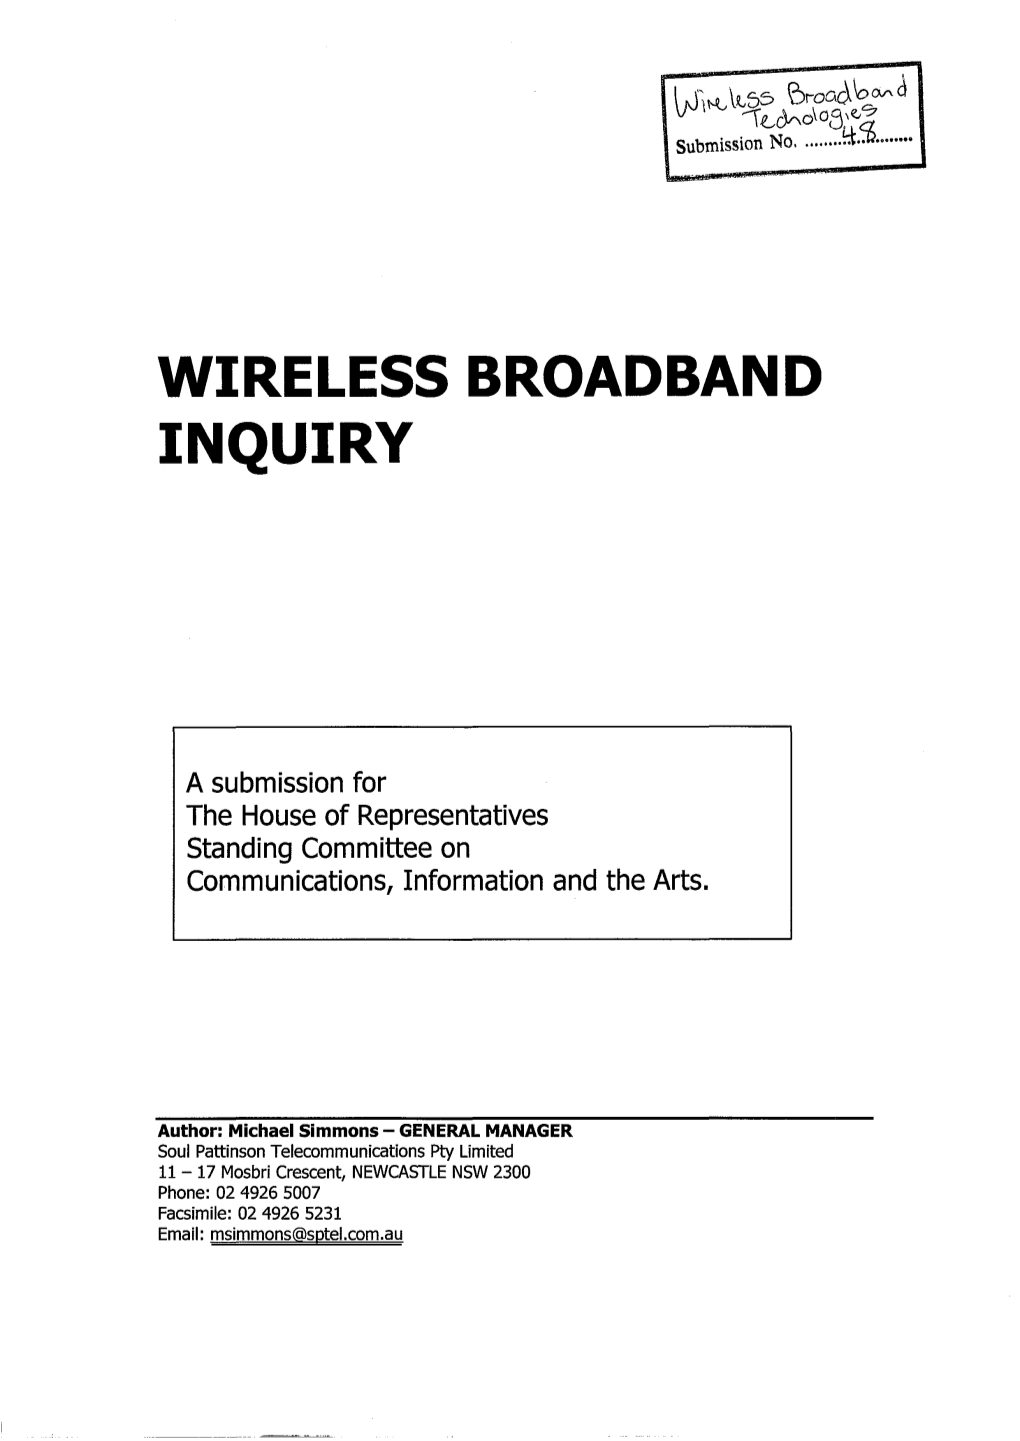 Wireless Broadband Inquiry